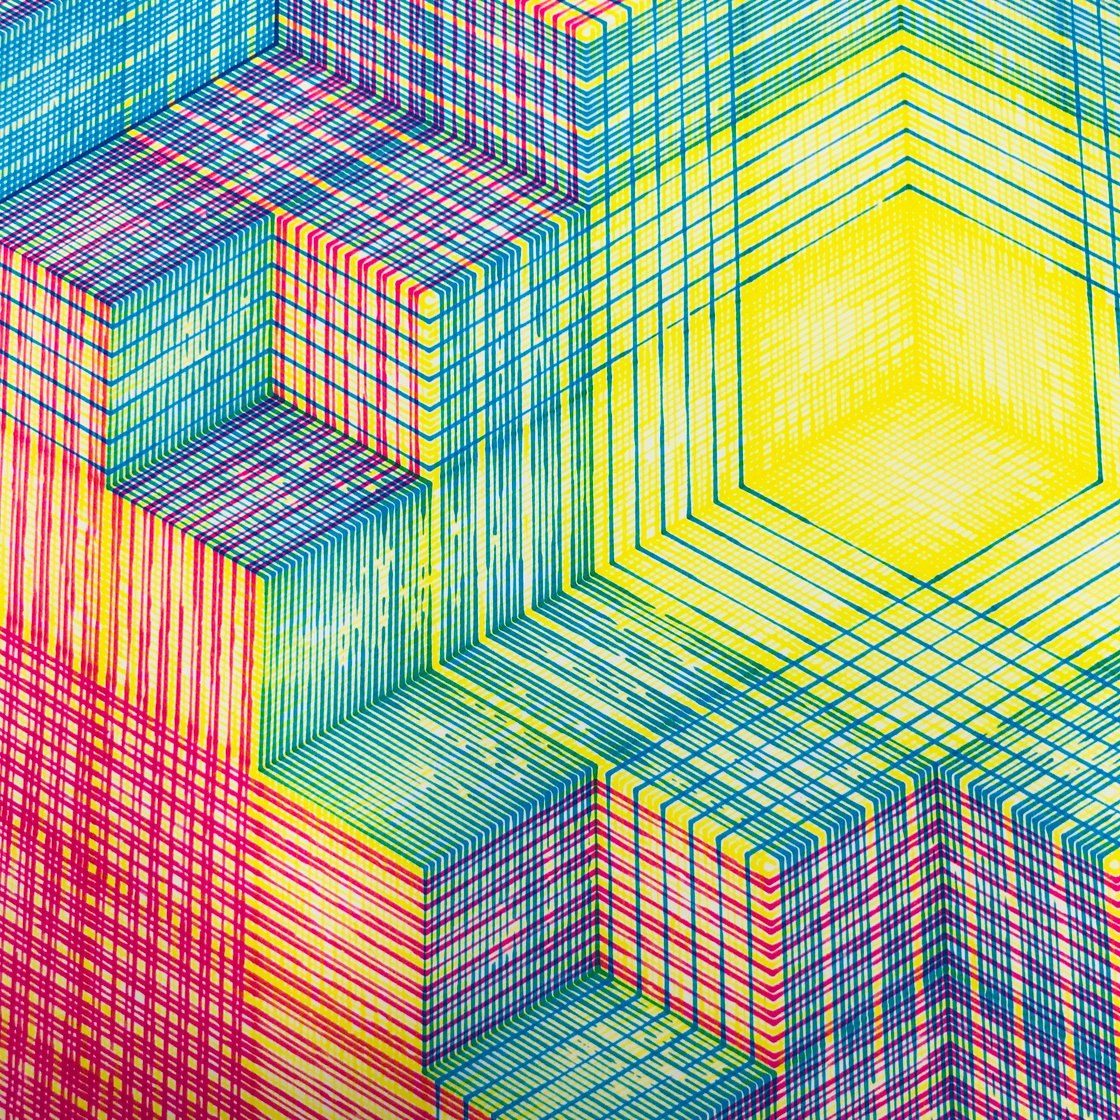 Image of Recursive Cubes 3M